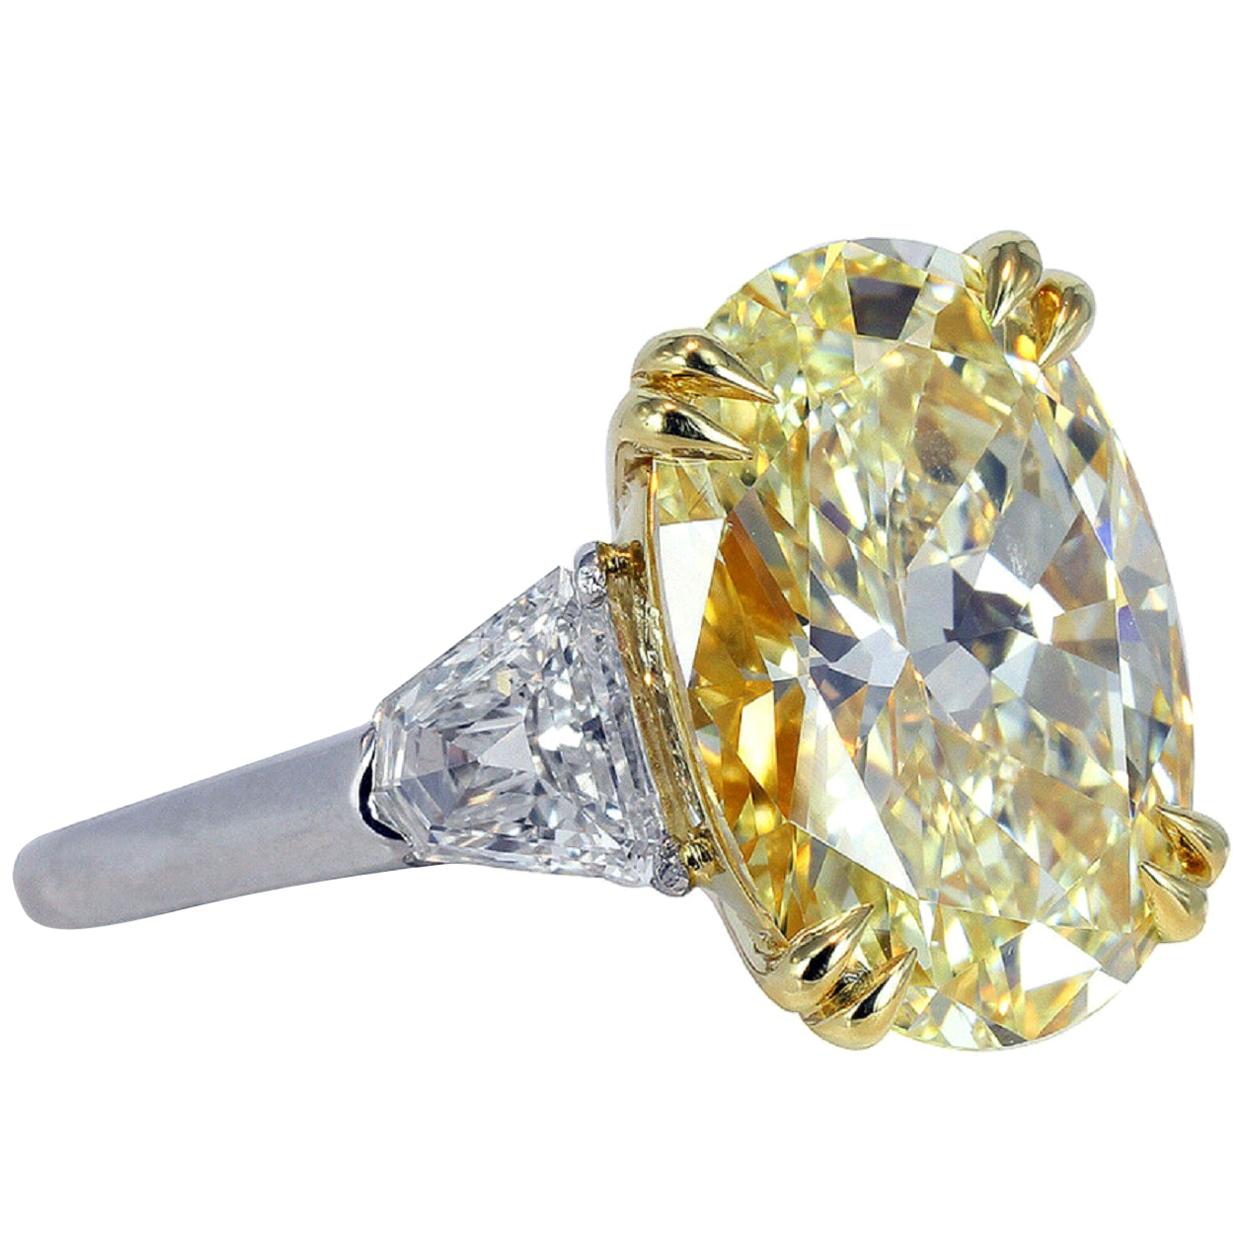 Internally Flawless GIA 2 Carat Fancy Light Yellow Oval Diamond Ring